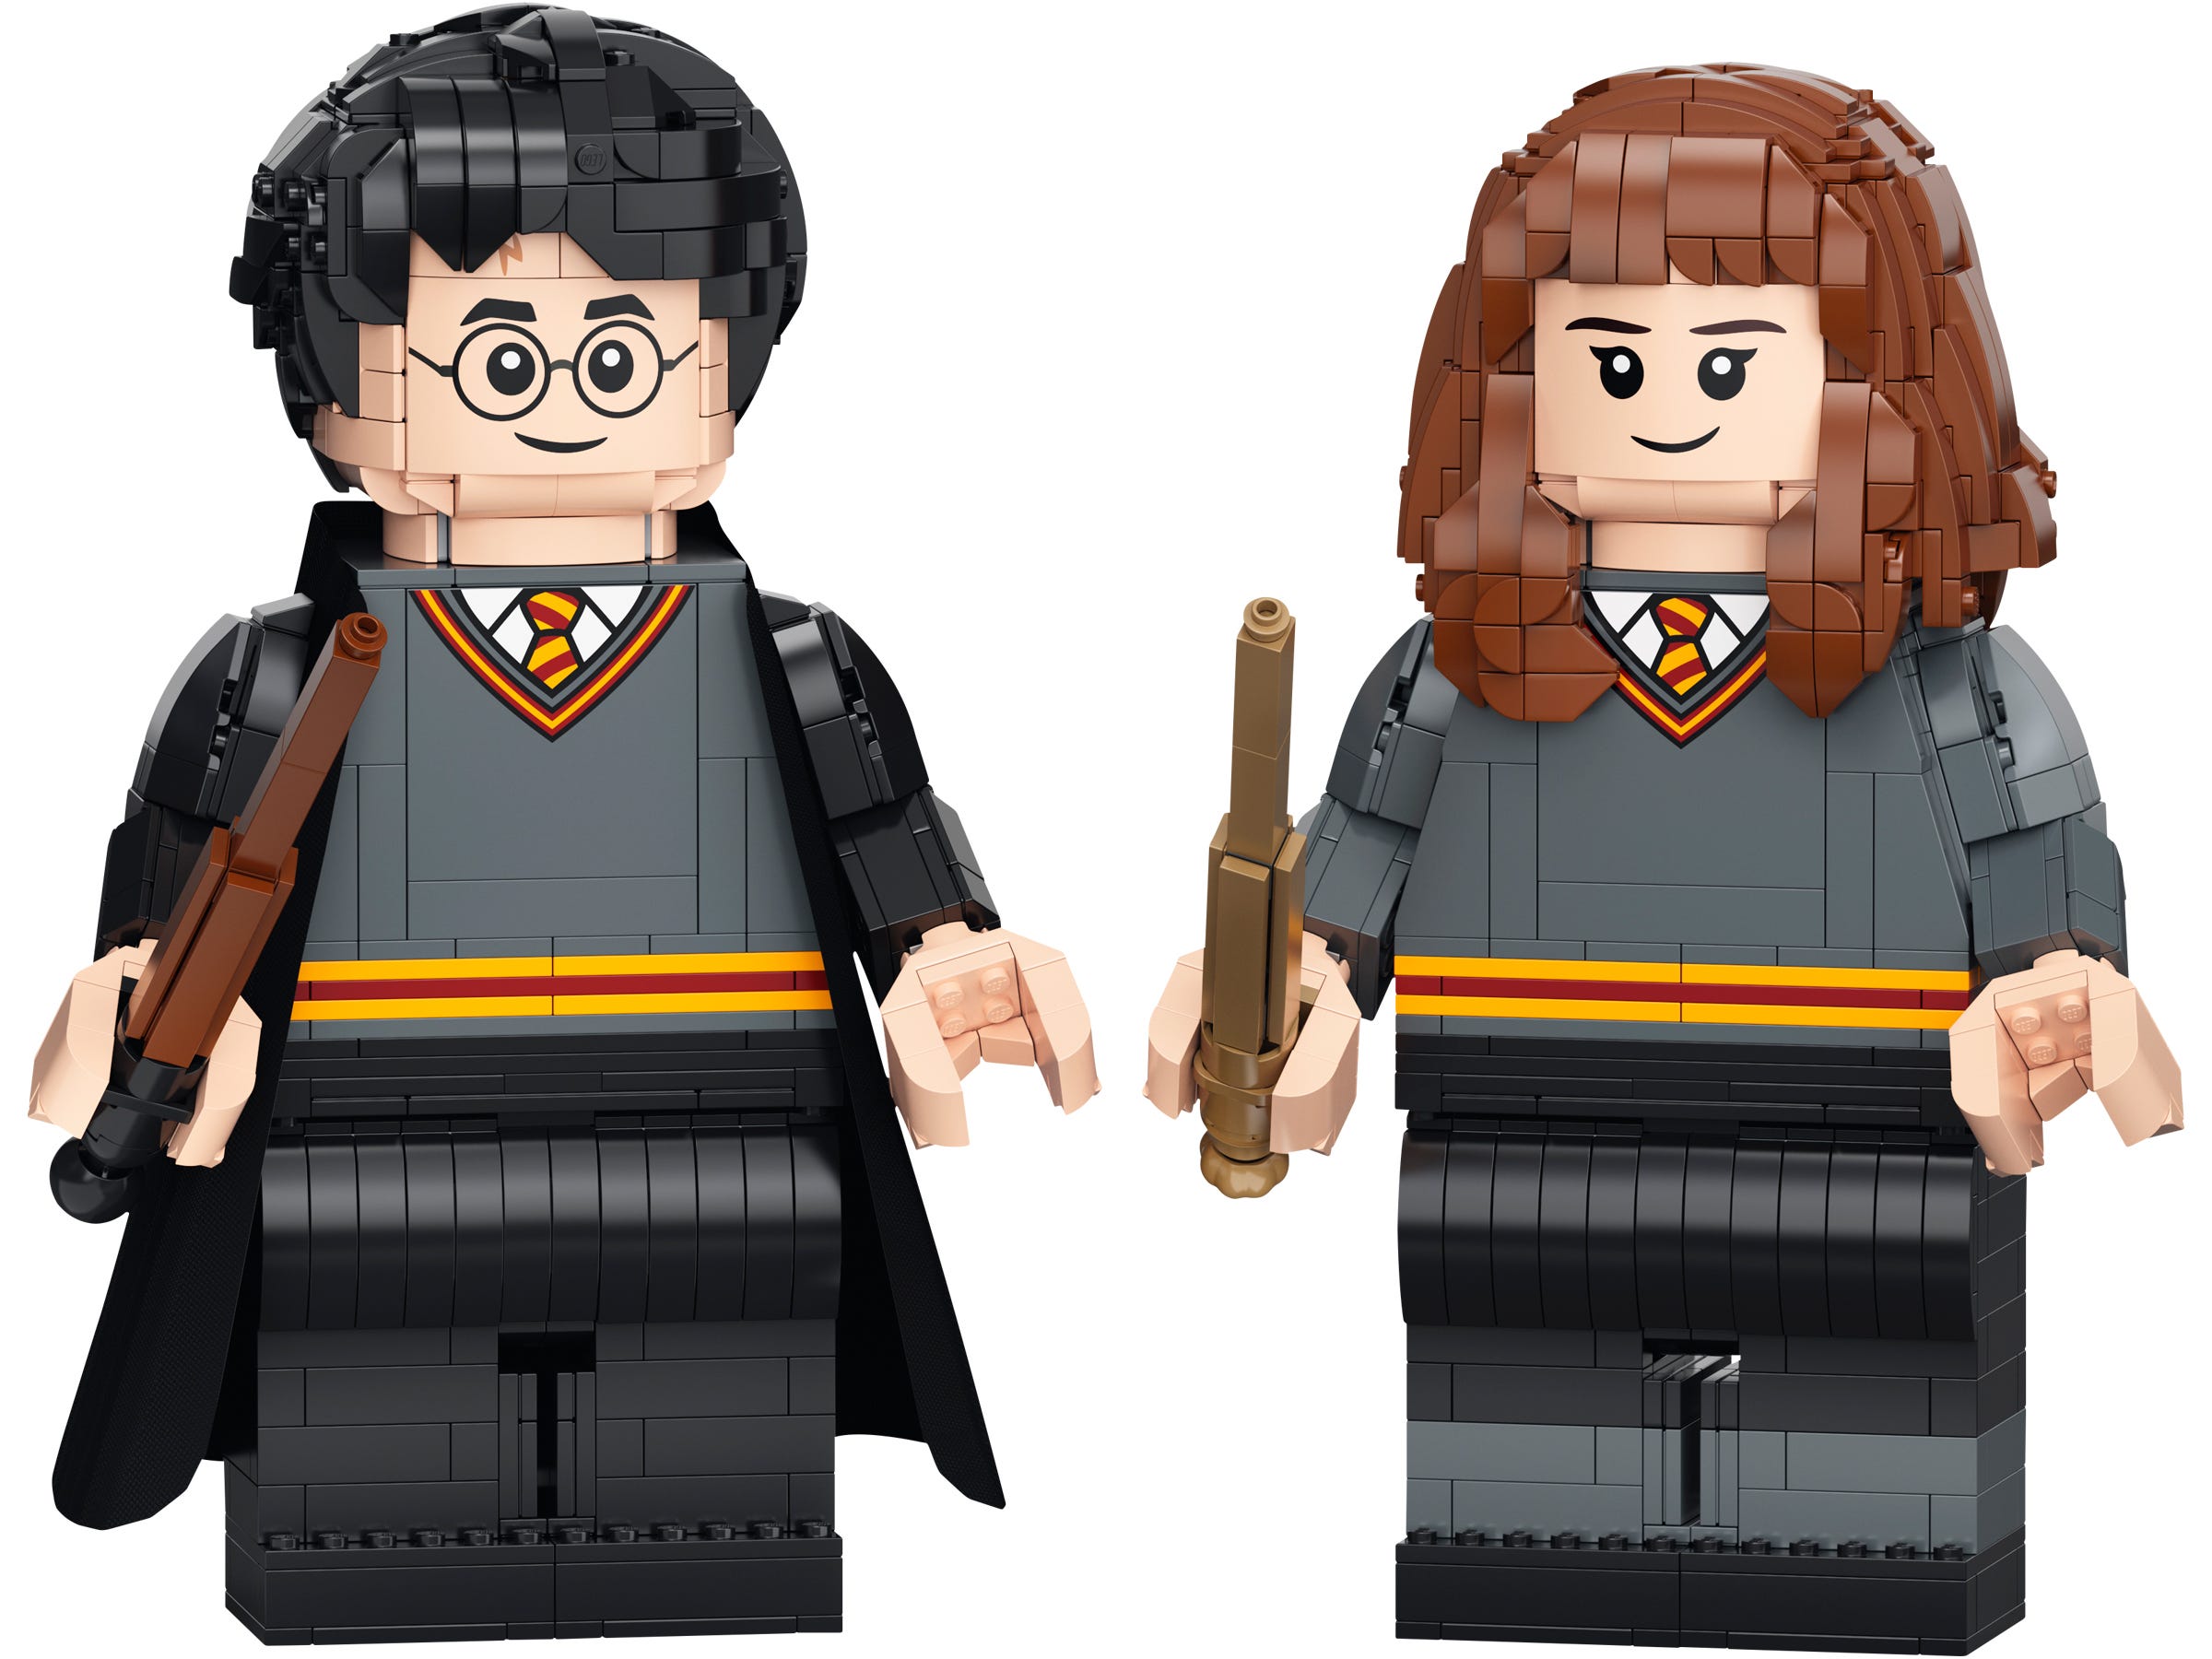 Harry Potter & Hermione Granger"